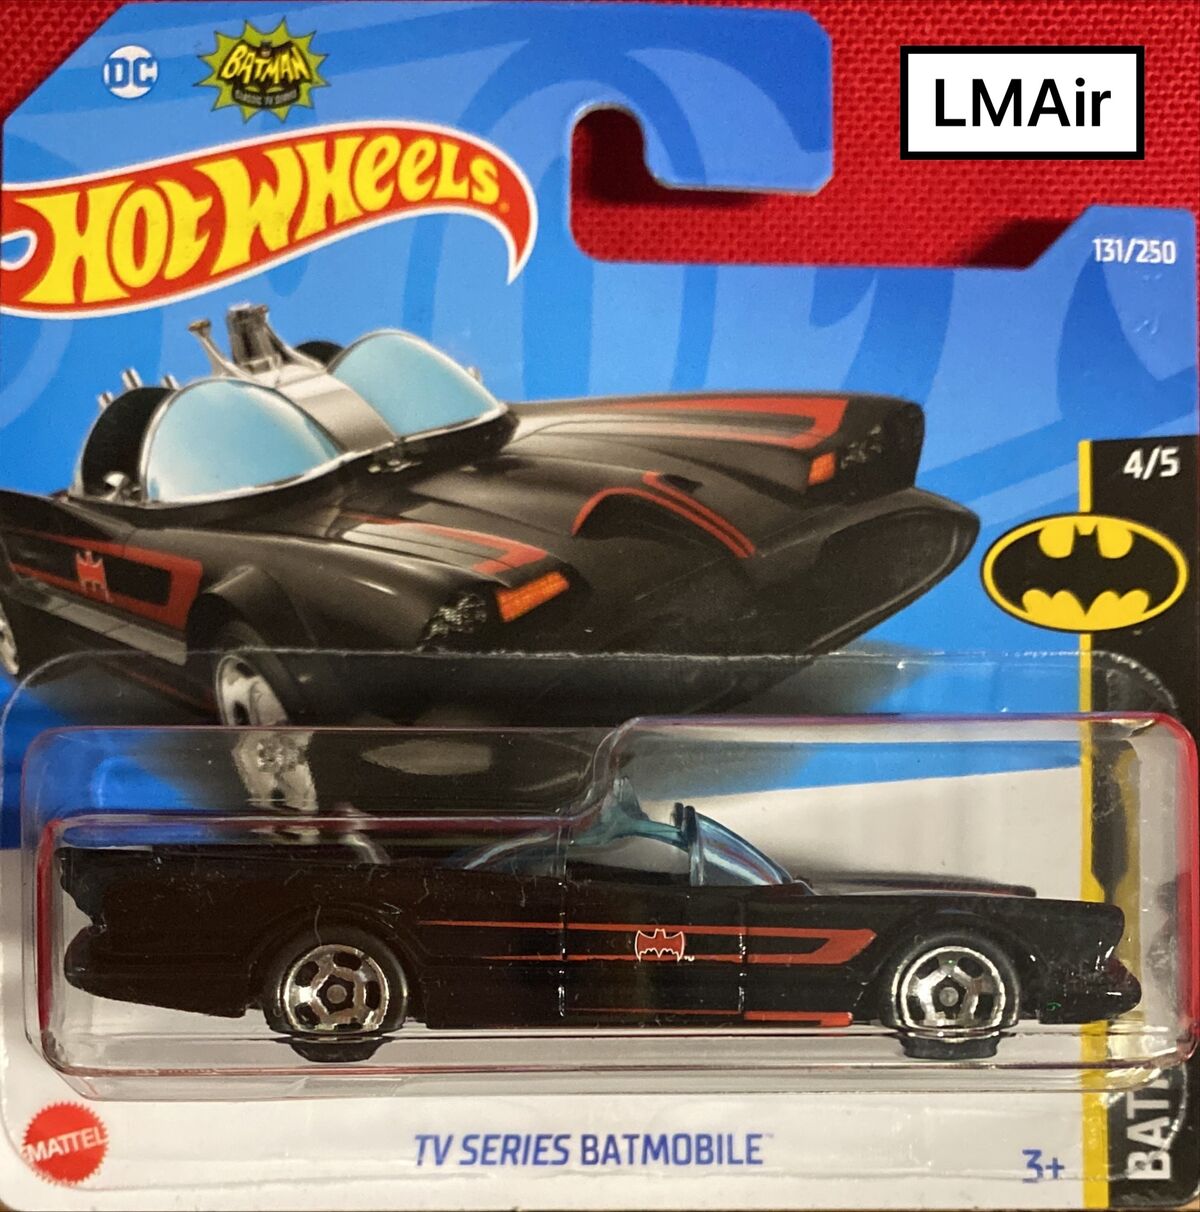 1966 Tv Series Batmobile Hot Wheels Wiki Fandom